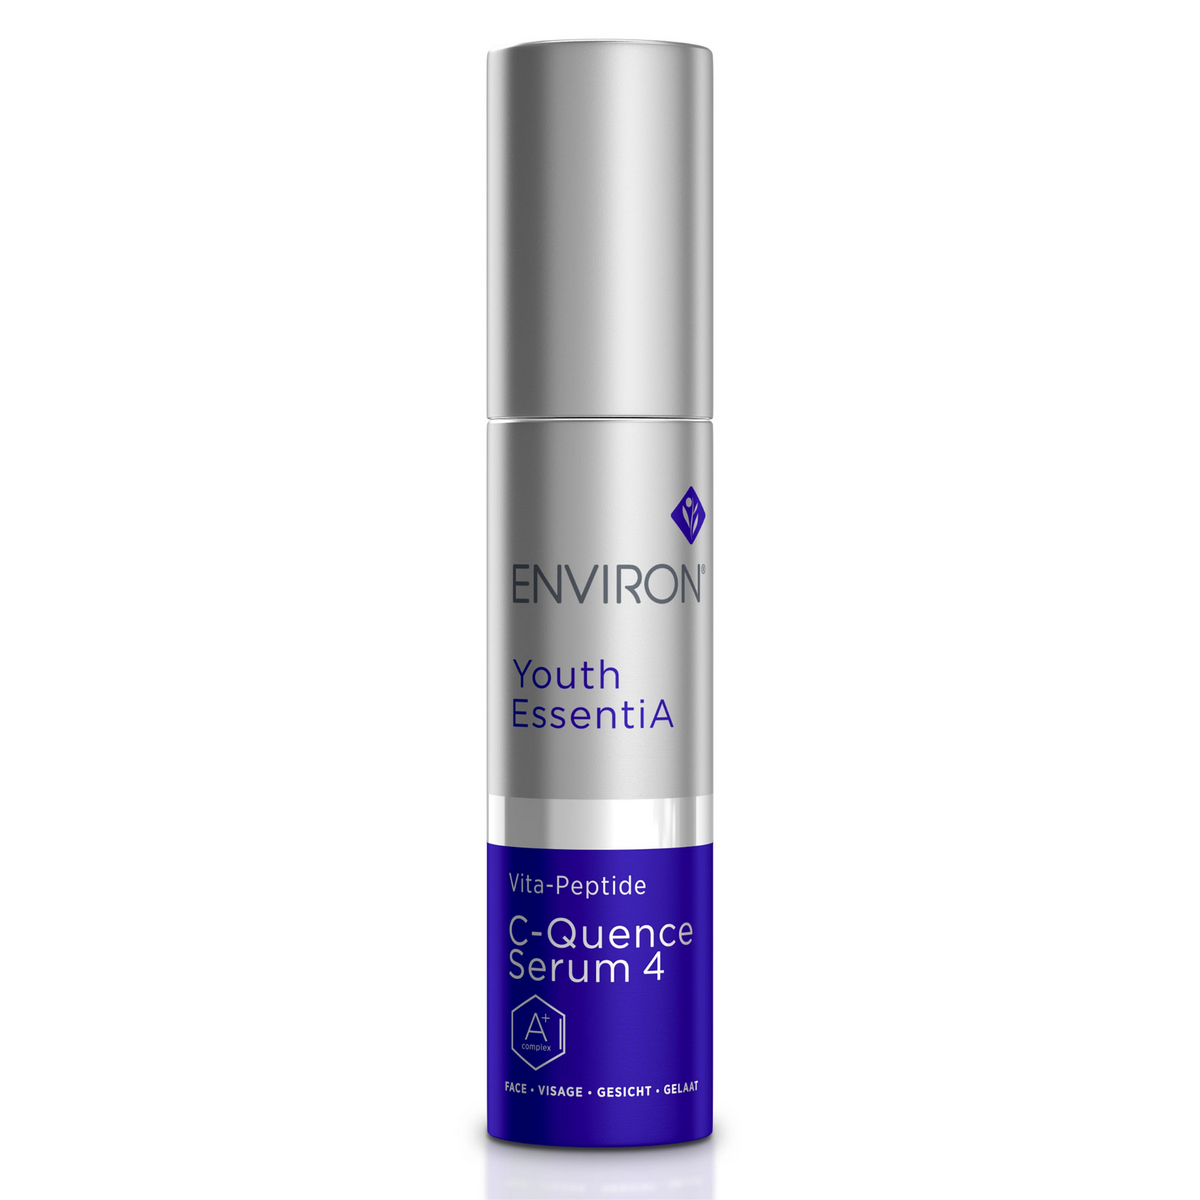 Environ - Vita-Peptide C-Quence Serum 4 (35 ml) - Sarah Akram Skincare